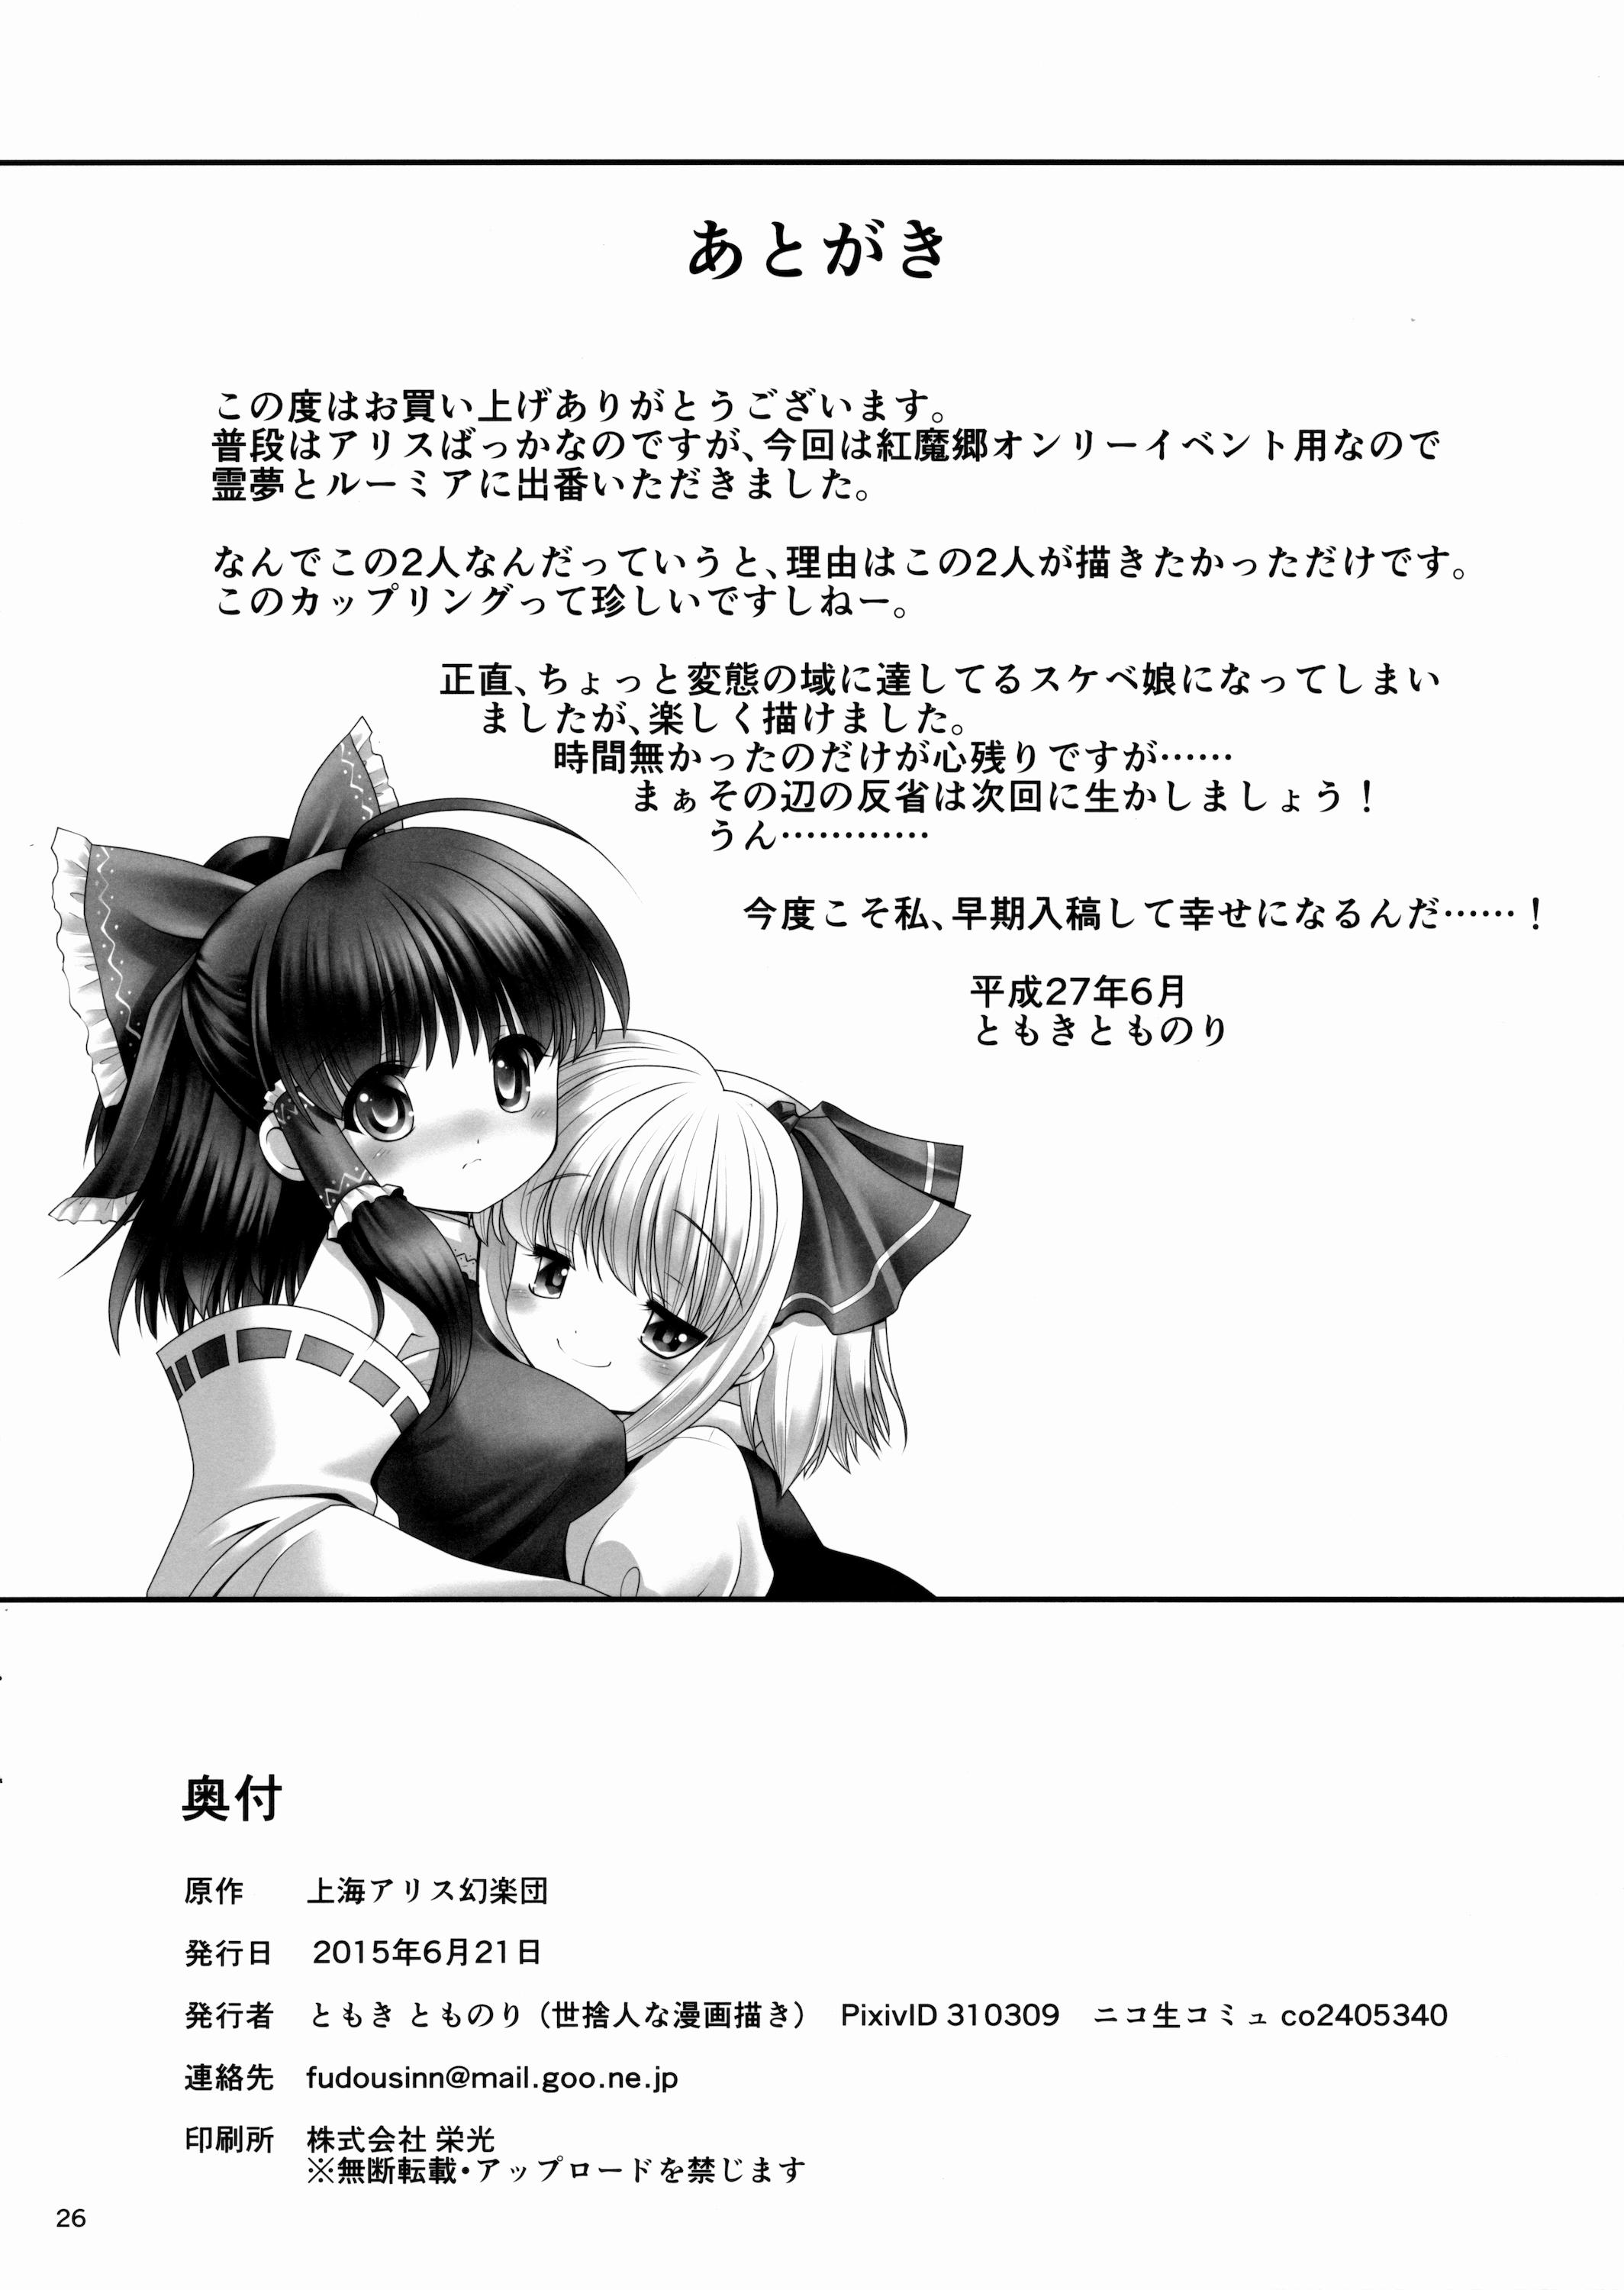 Interacial Kouhaku to Yoiyami ga Zenbu Kanaete ageru! - Touhou project Hardon - Page 25